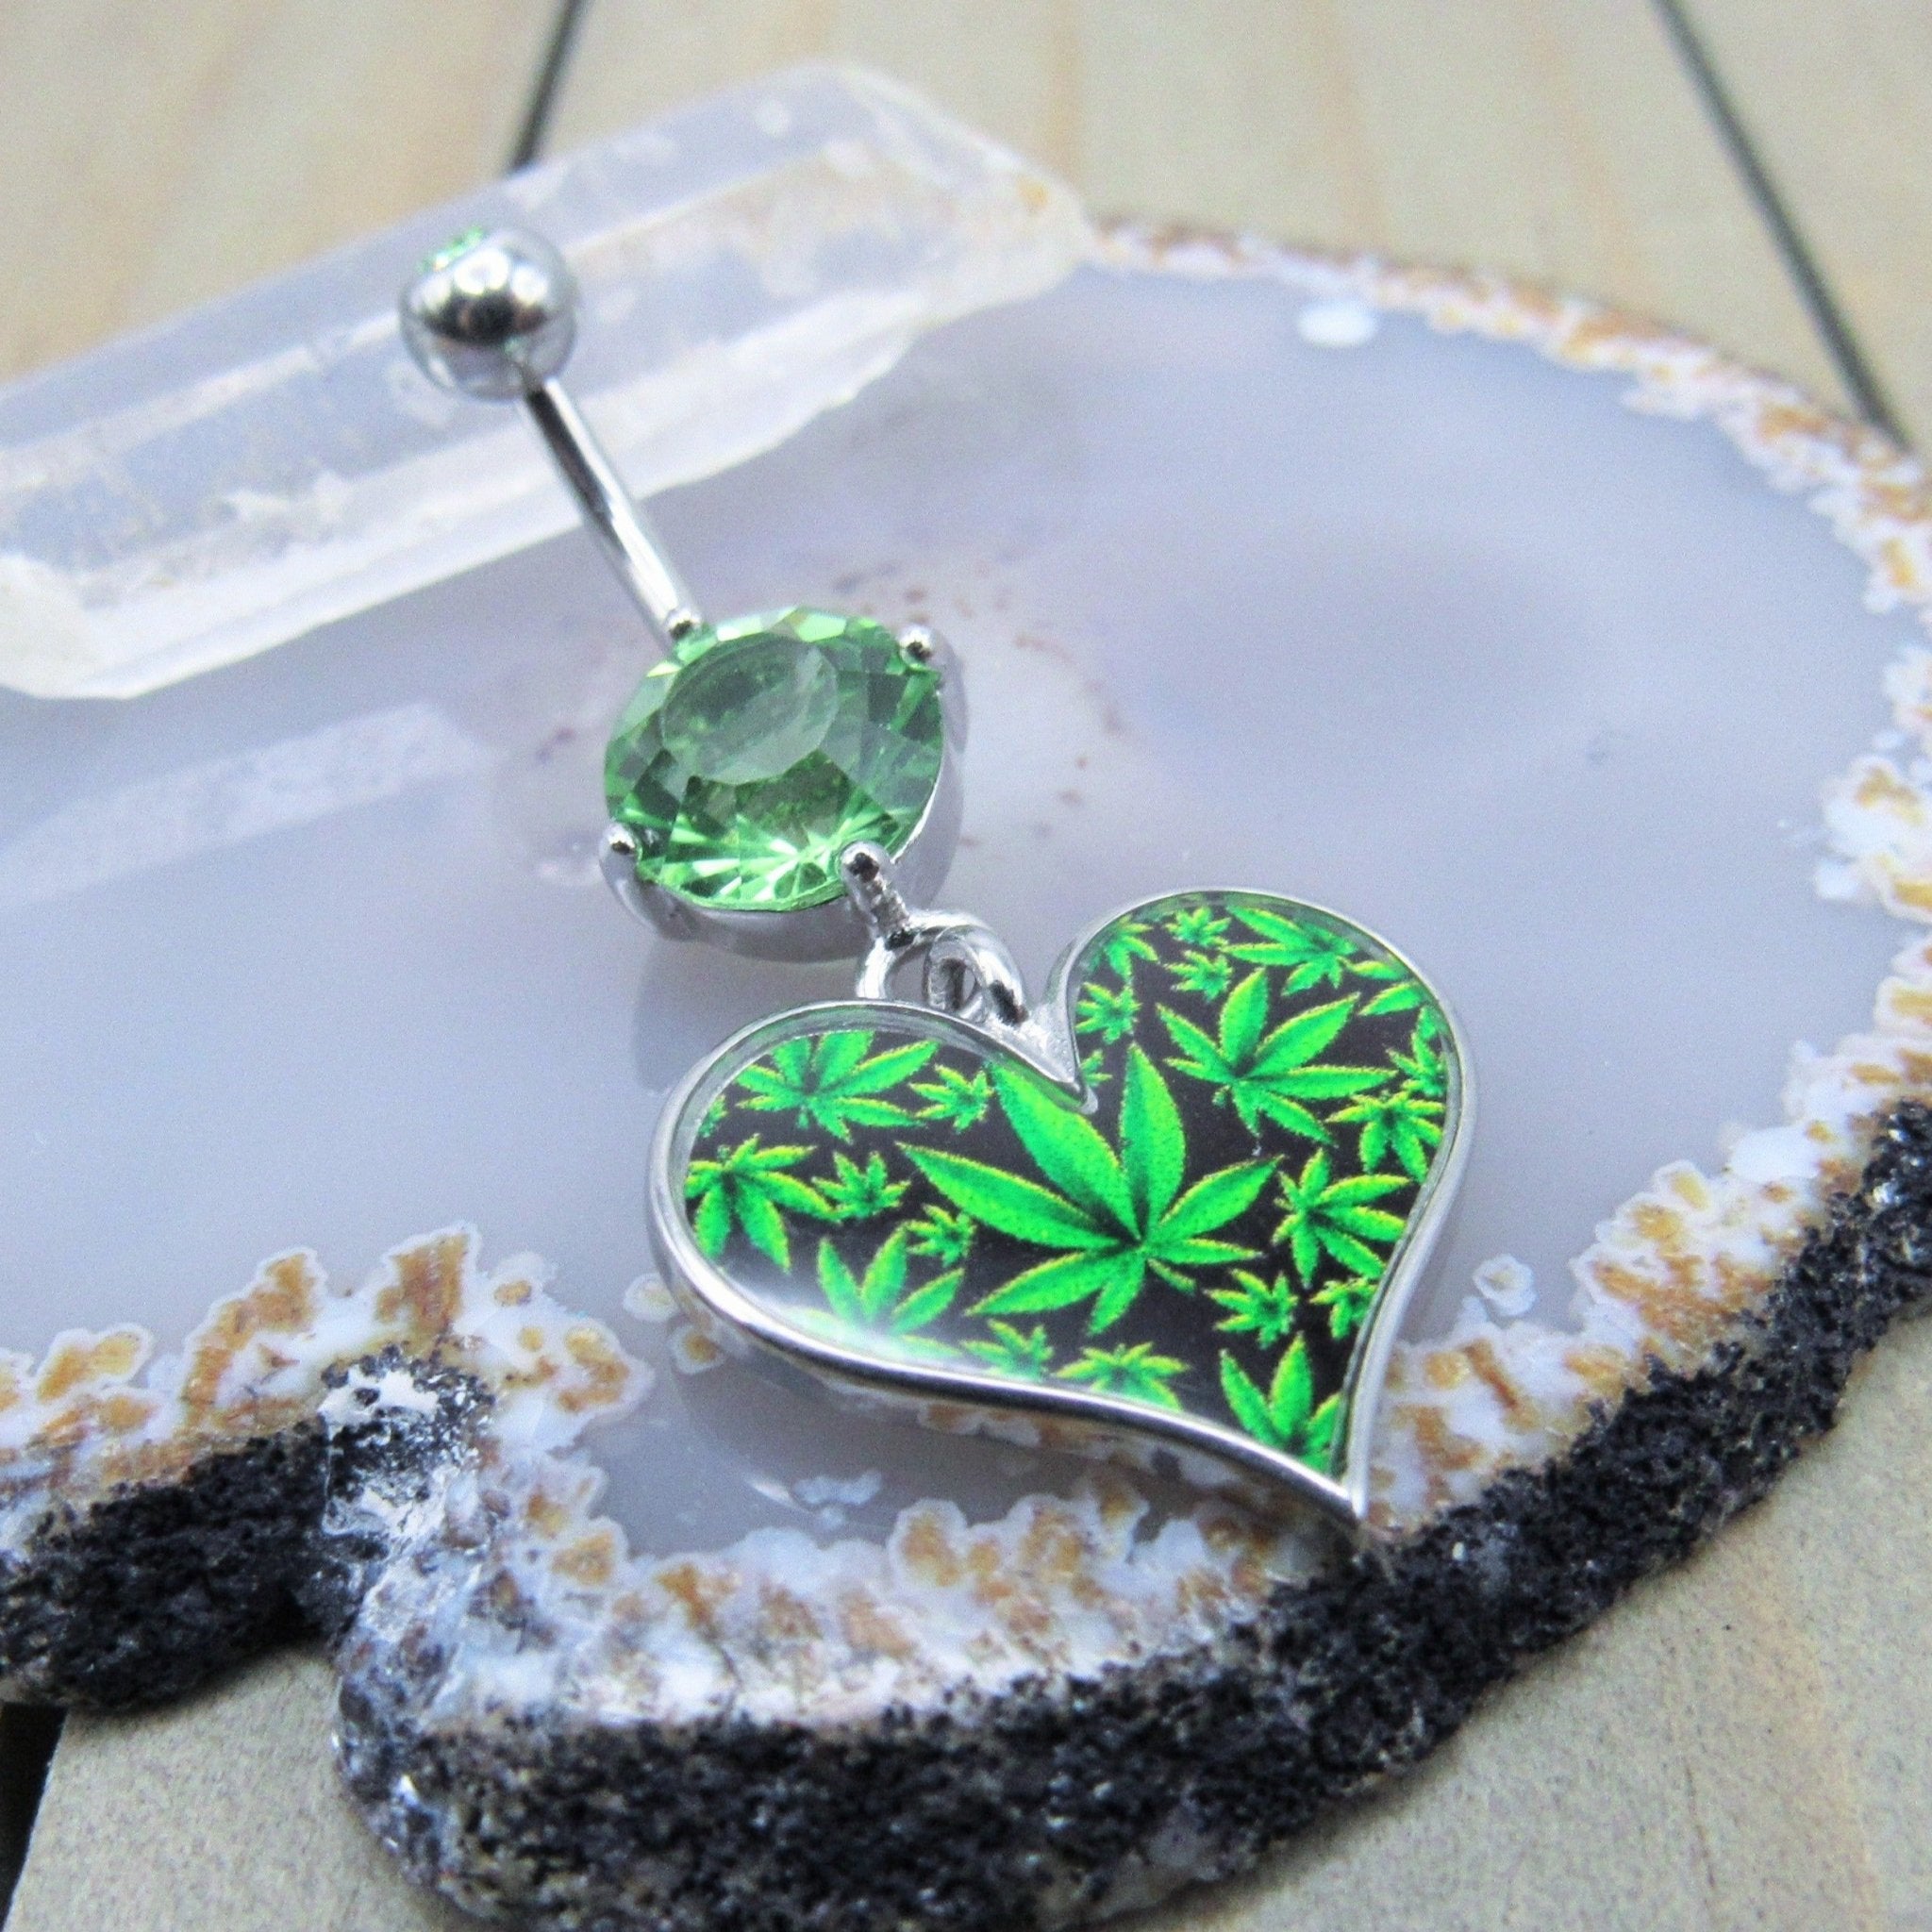 Green gemstone weed emblem heart design belly button piercing ring